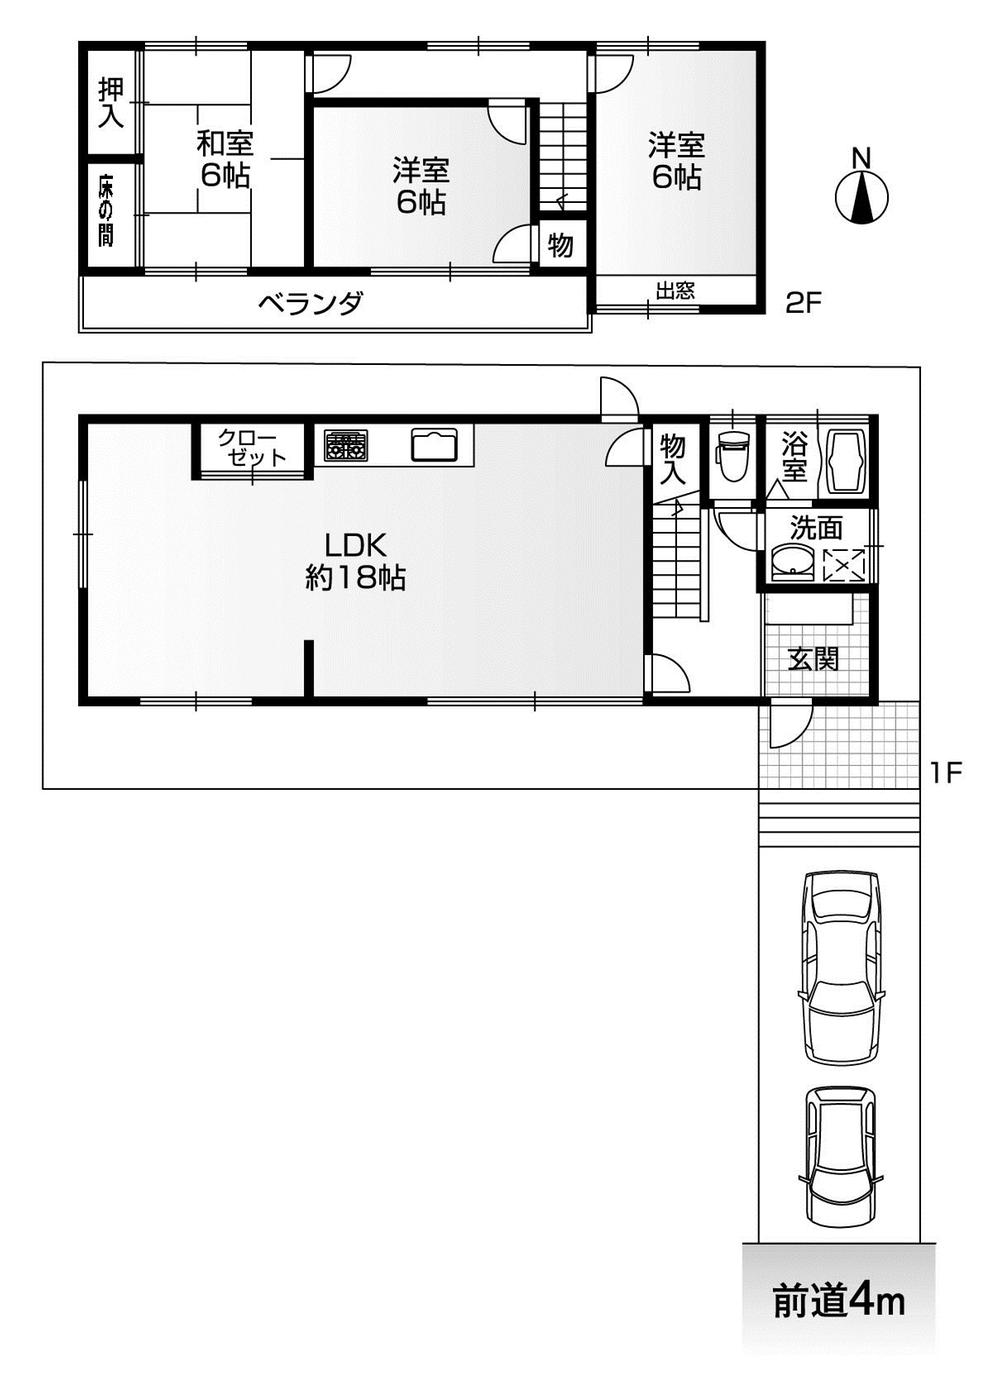 Floor plan. 16,950,000 yen, 3LDK, Land area 134.52 sq m , Building area 89.42 sq m